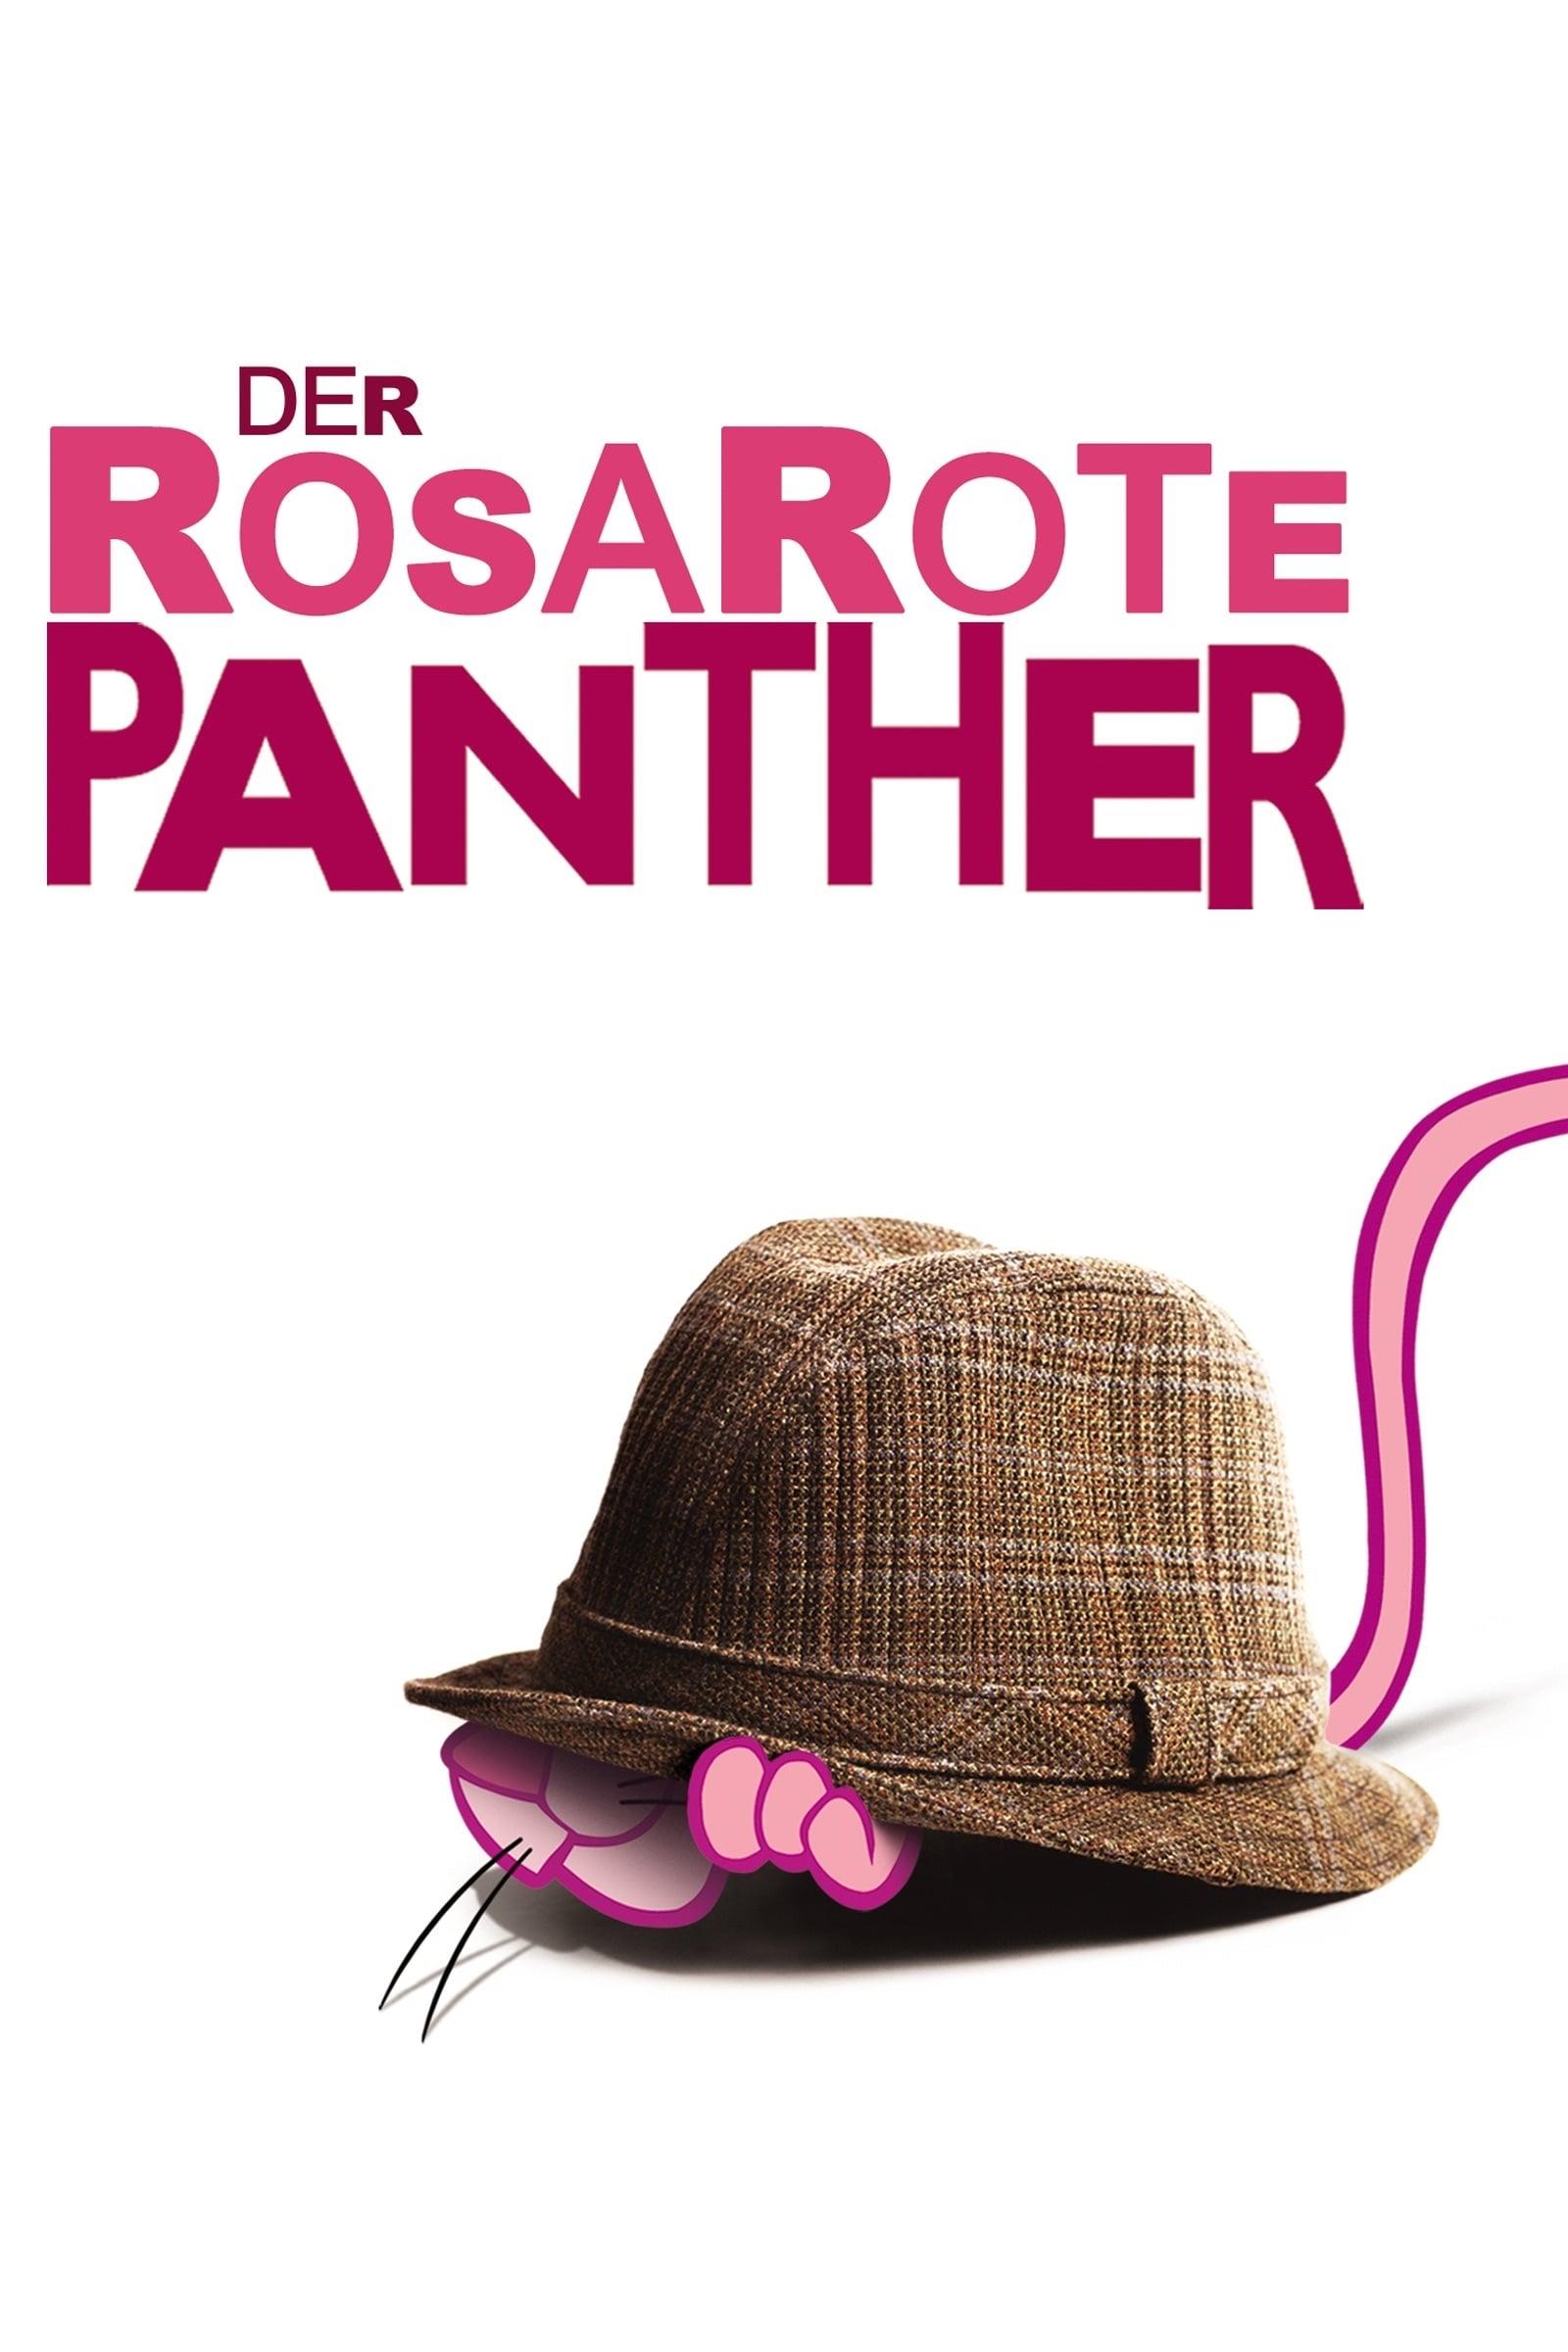 Der rosarote Panther poster